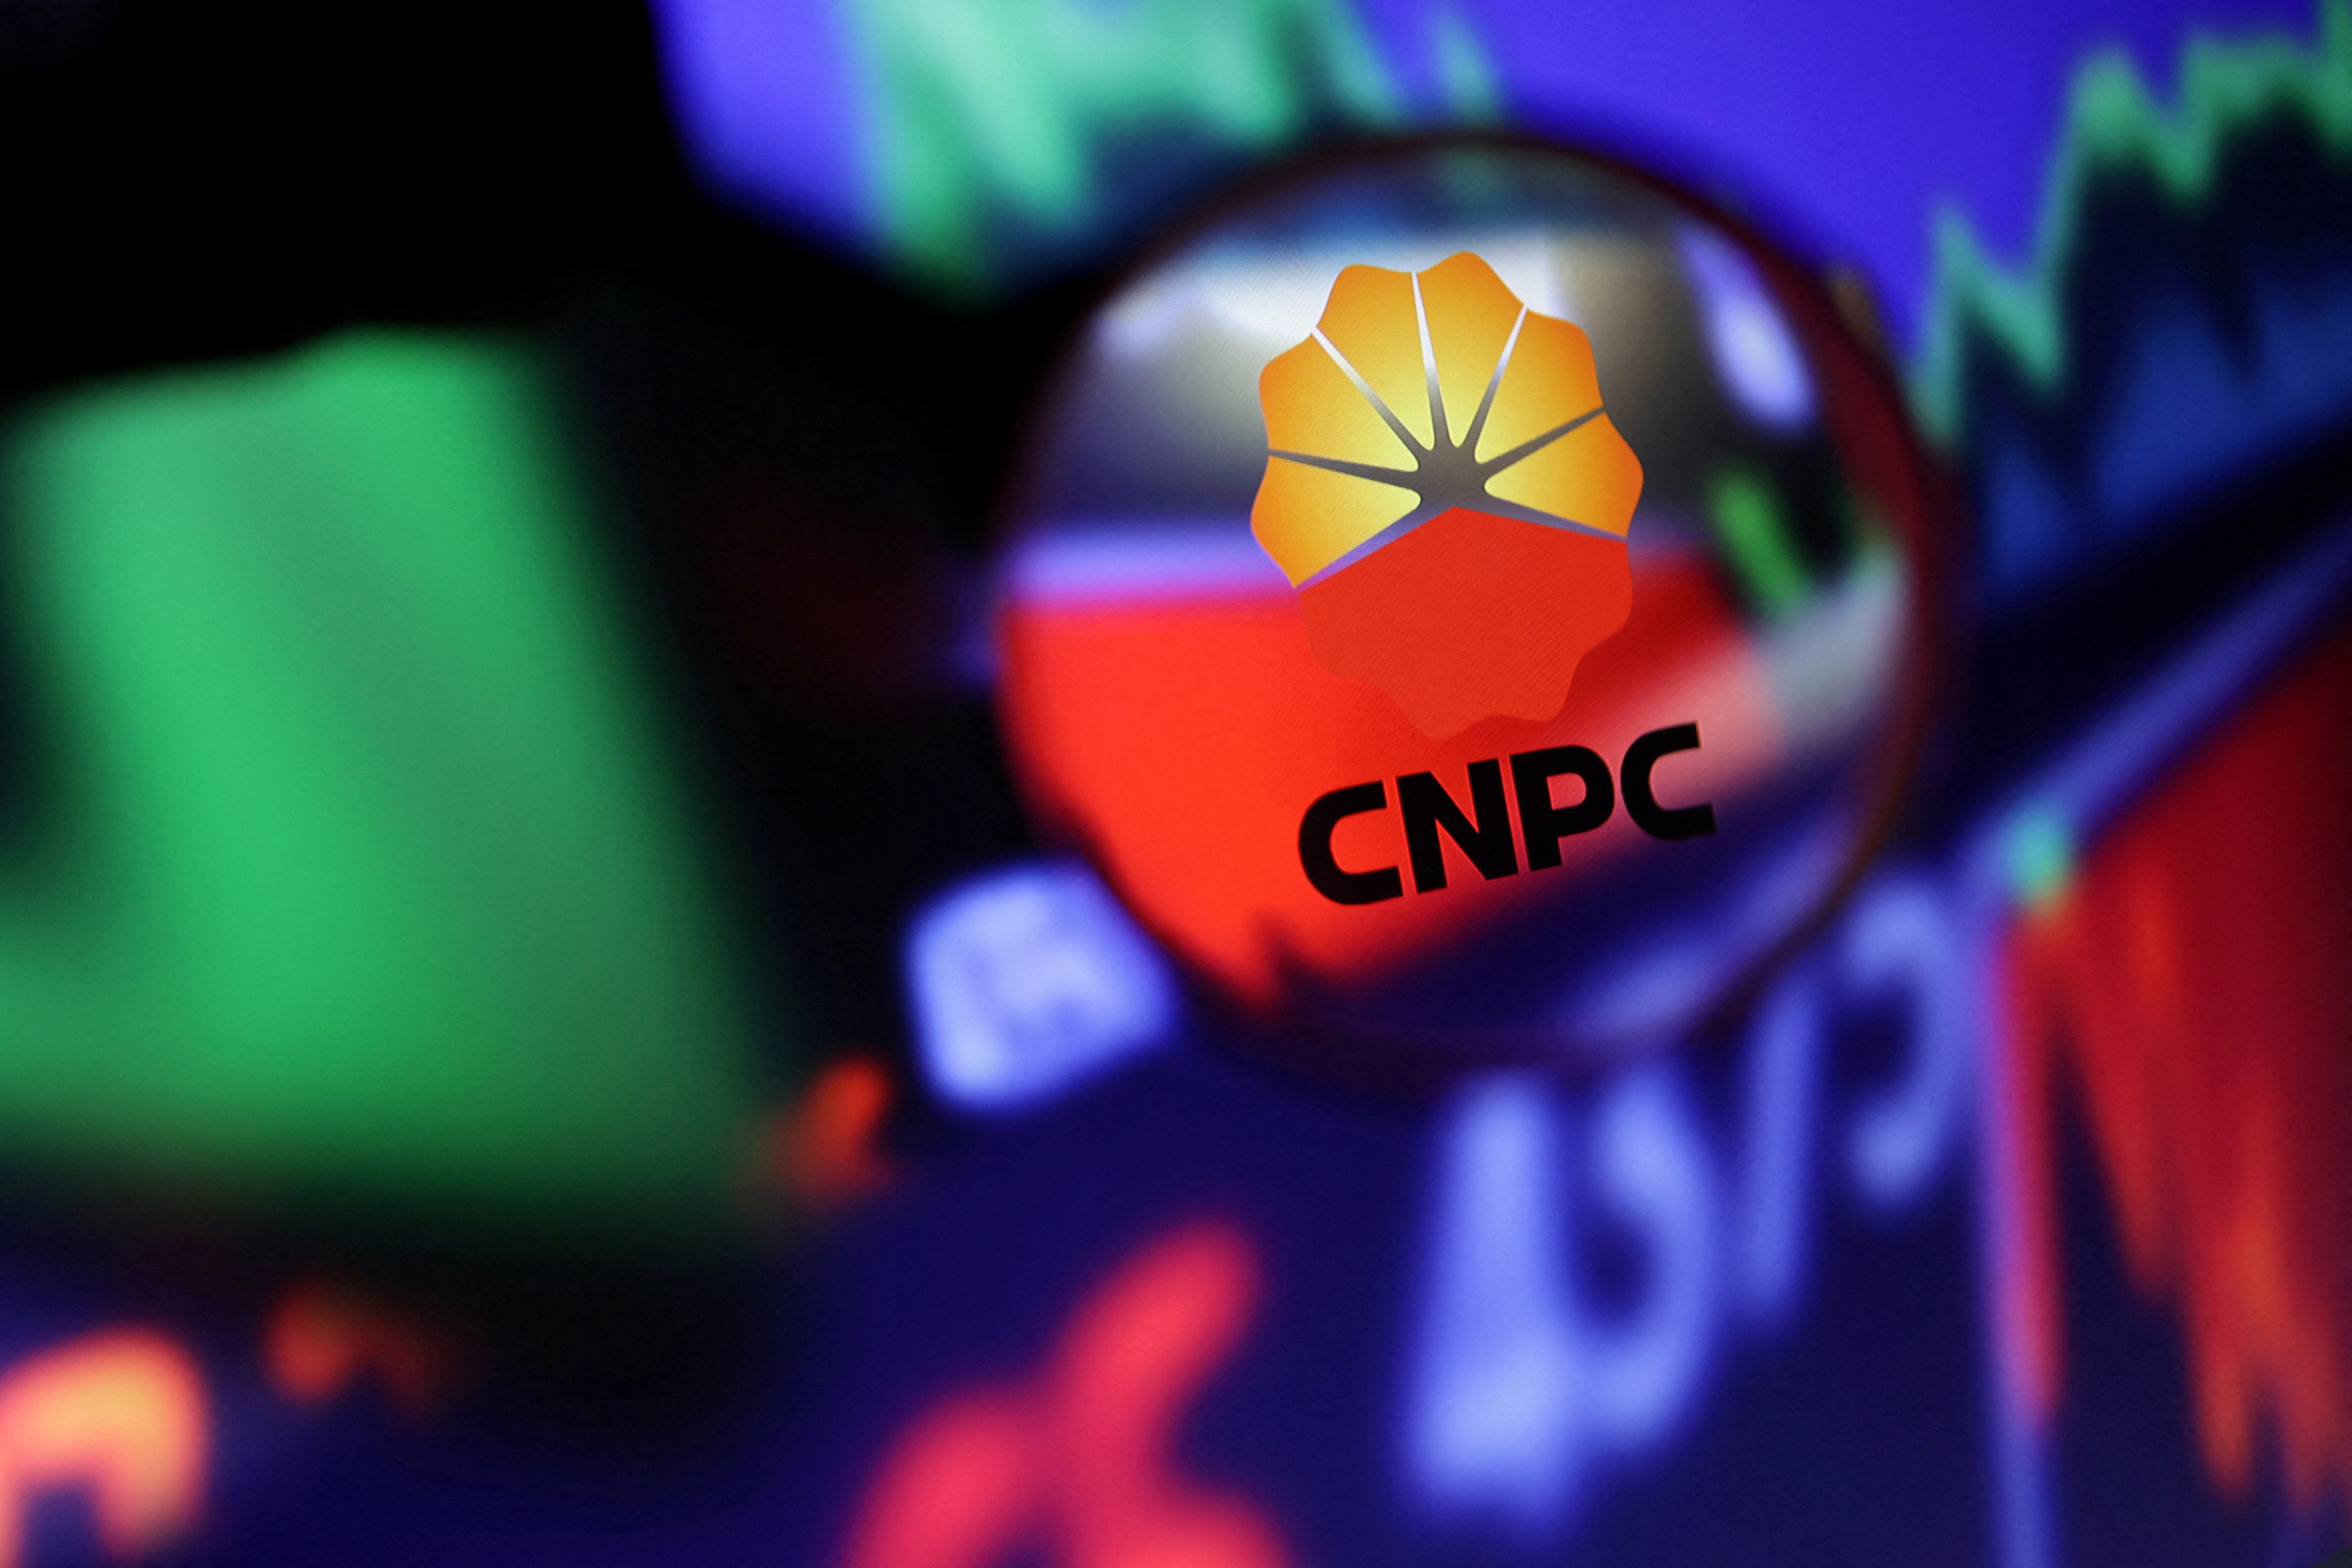 Illustration shows CNPC (China National Petroleum Corporation) logo and stock graph